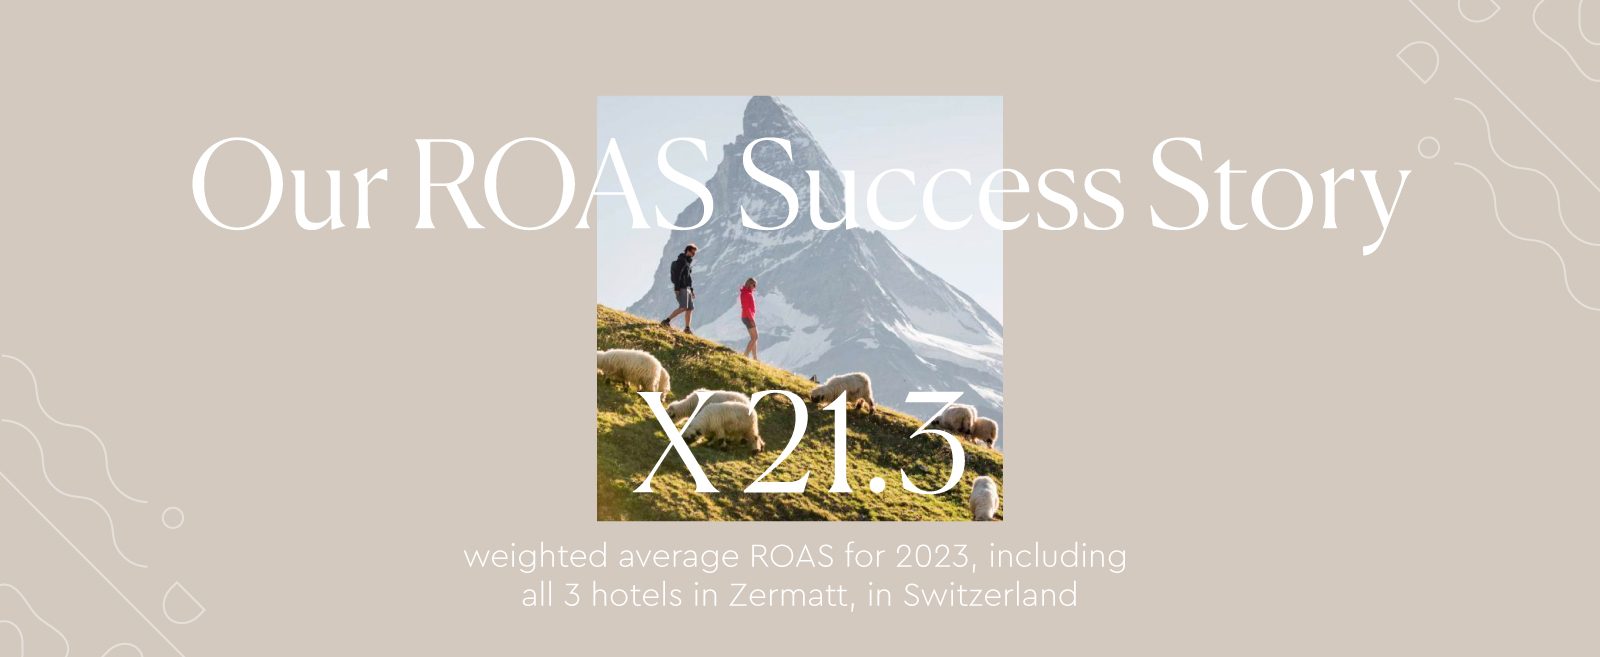 Michel Reybier Hospitality Zermatt ROAS Success